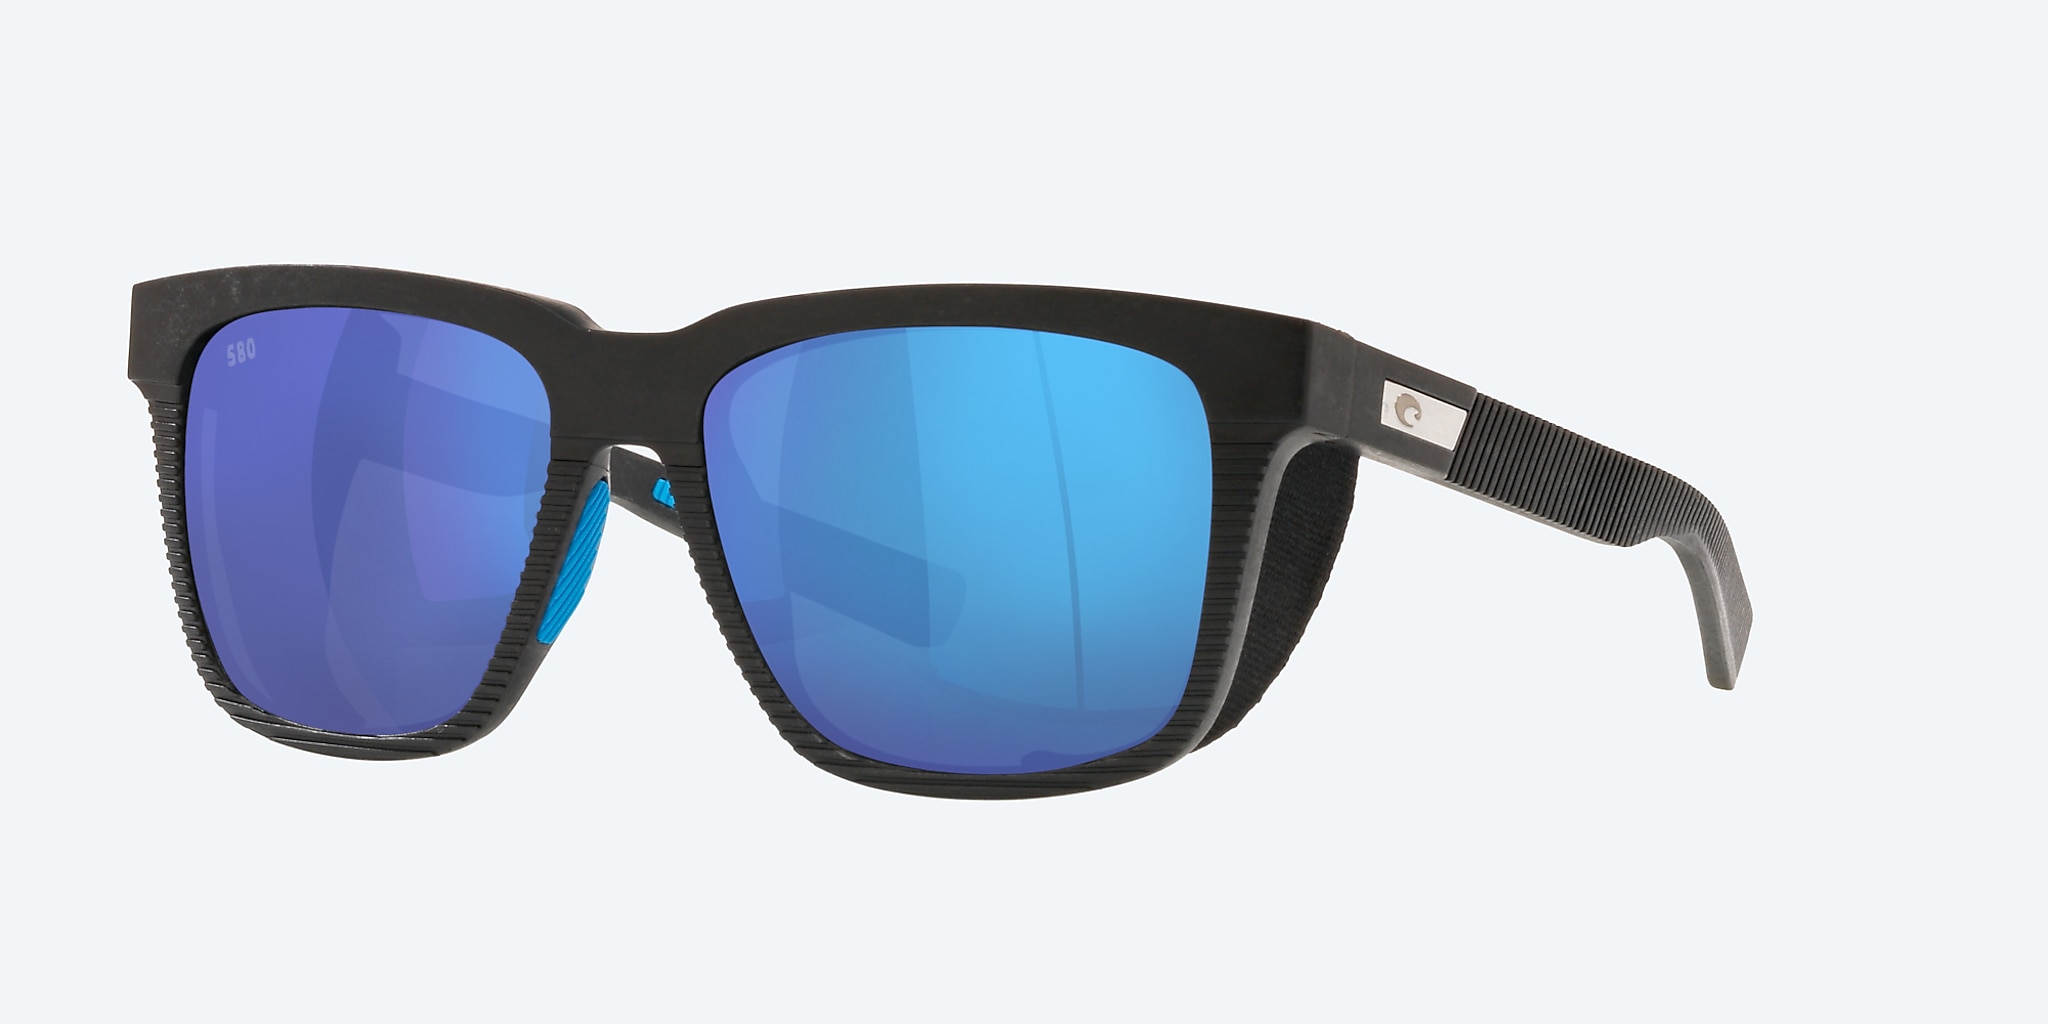 Pescador With Side Shield Polarized Sunglasses in Blue Mirror | Mar®